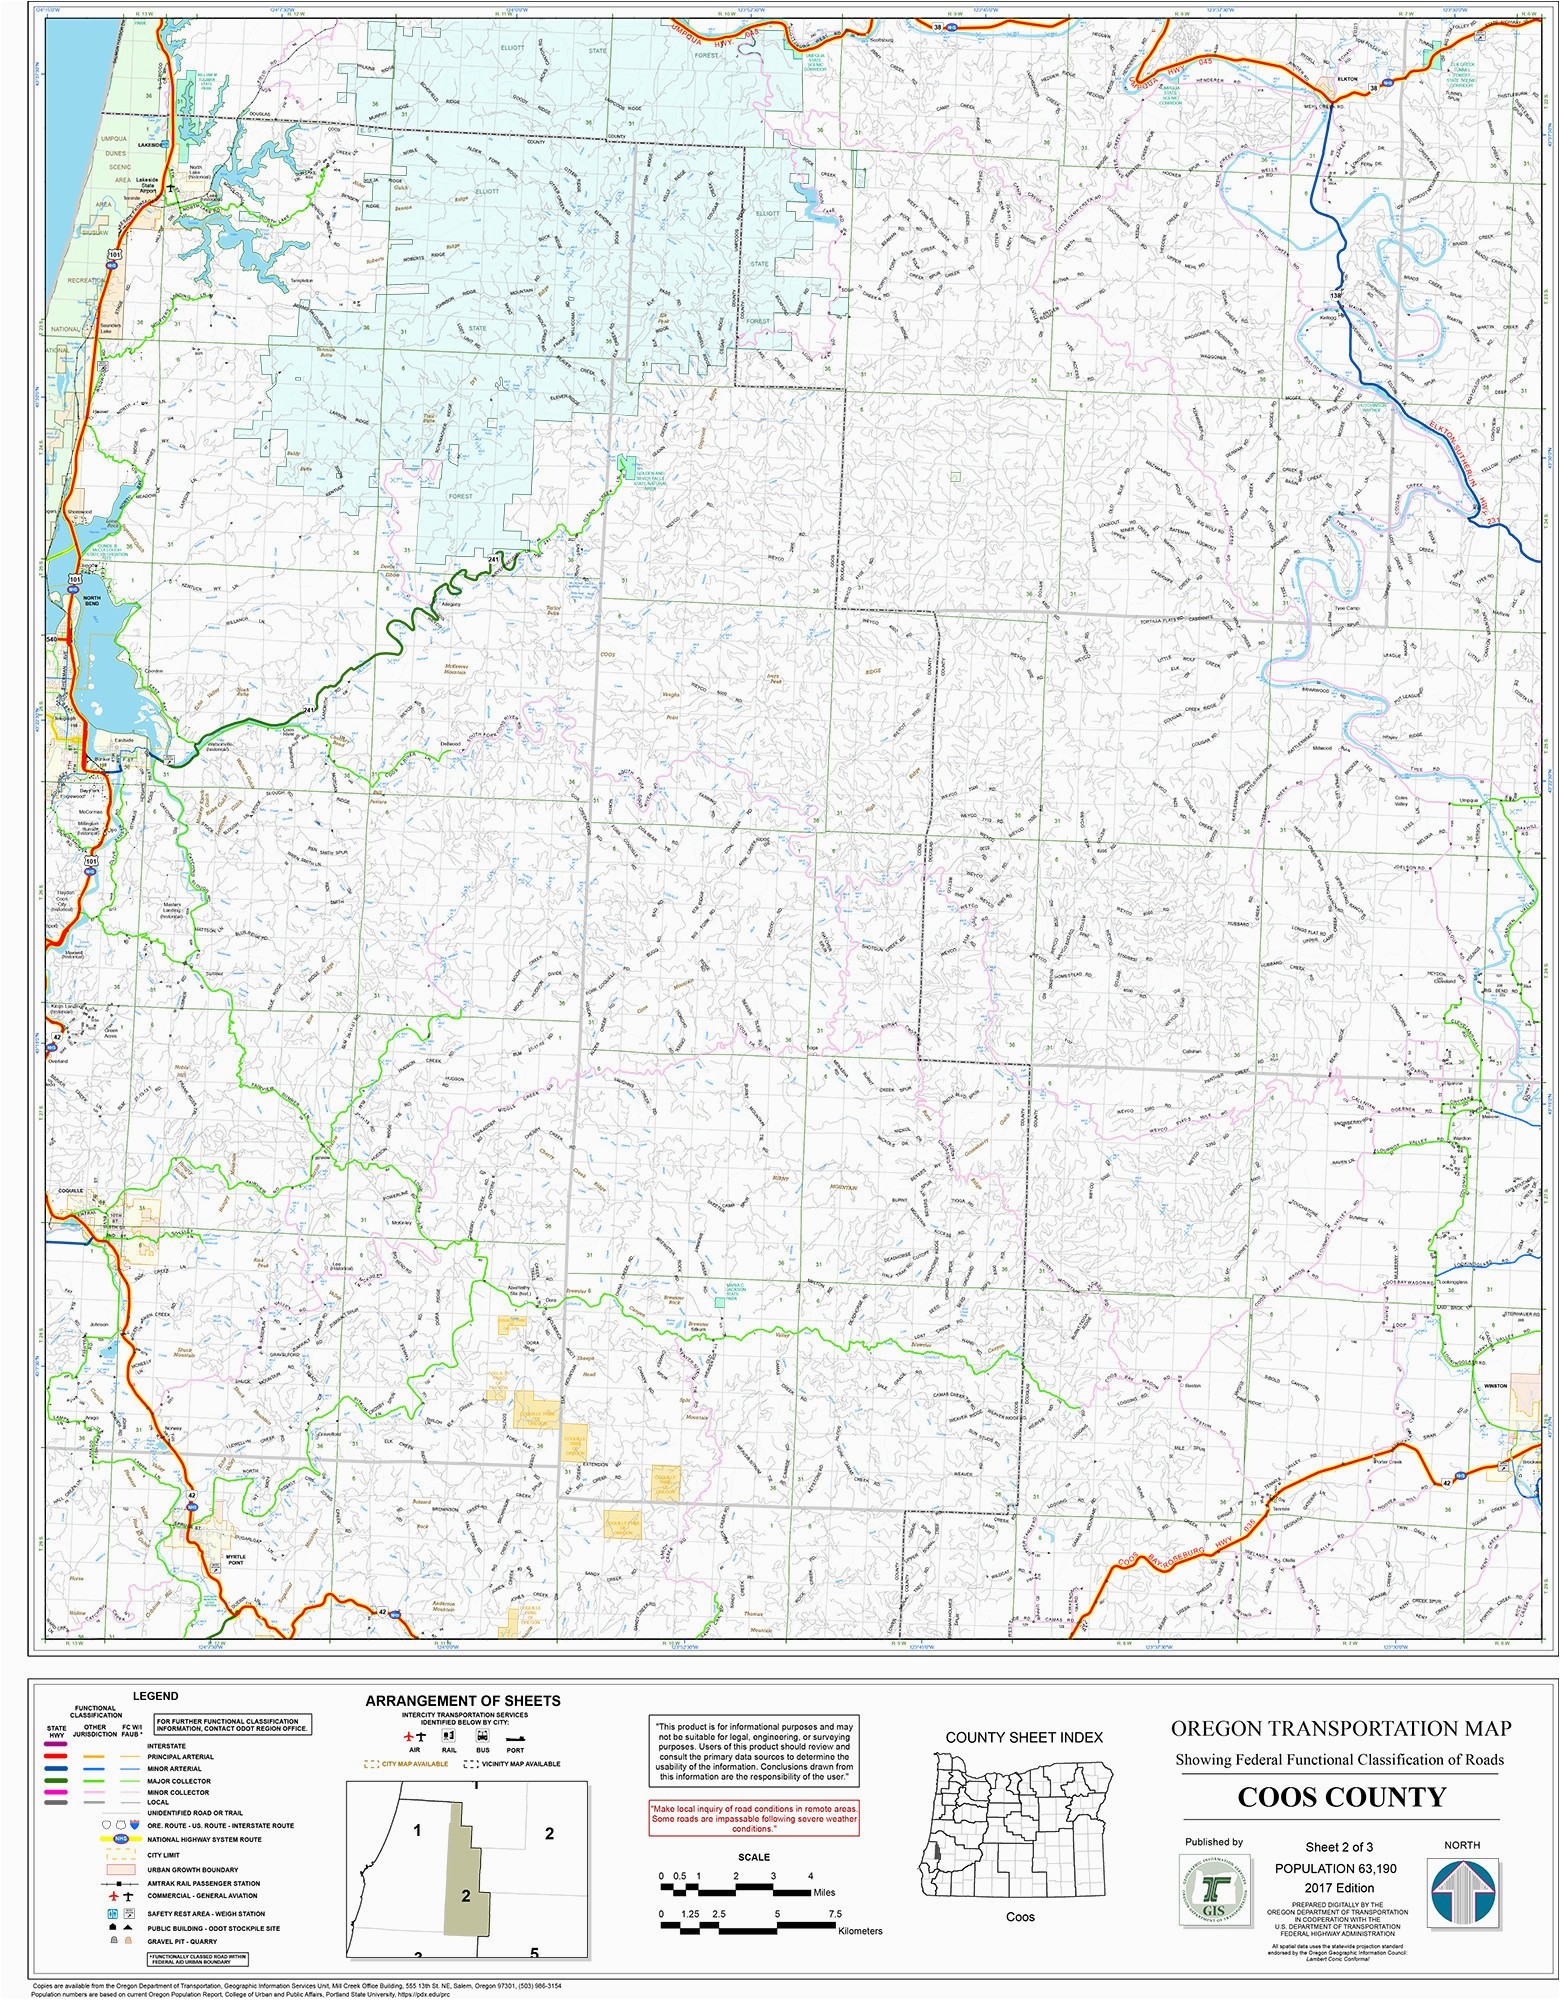 Maps Google Com Portland oregon Google Maps topography Maps Driving Directions